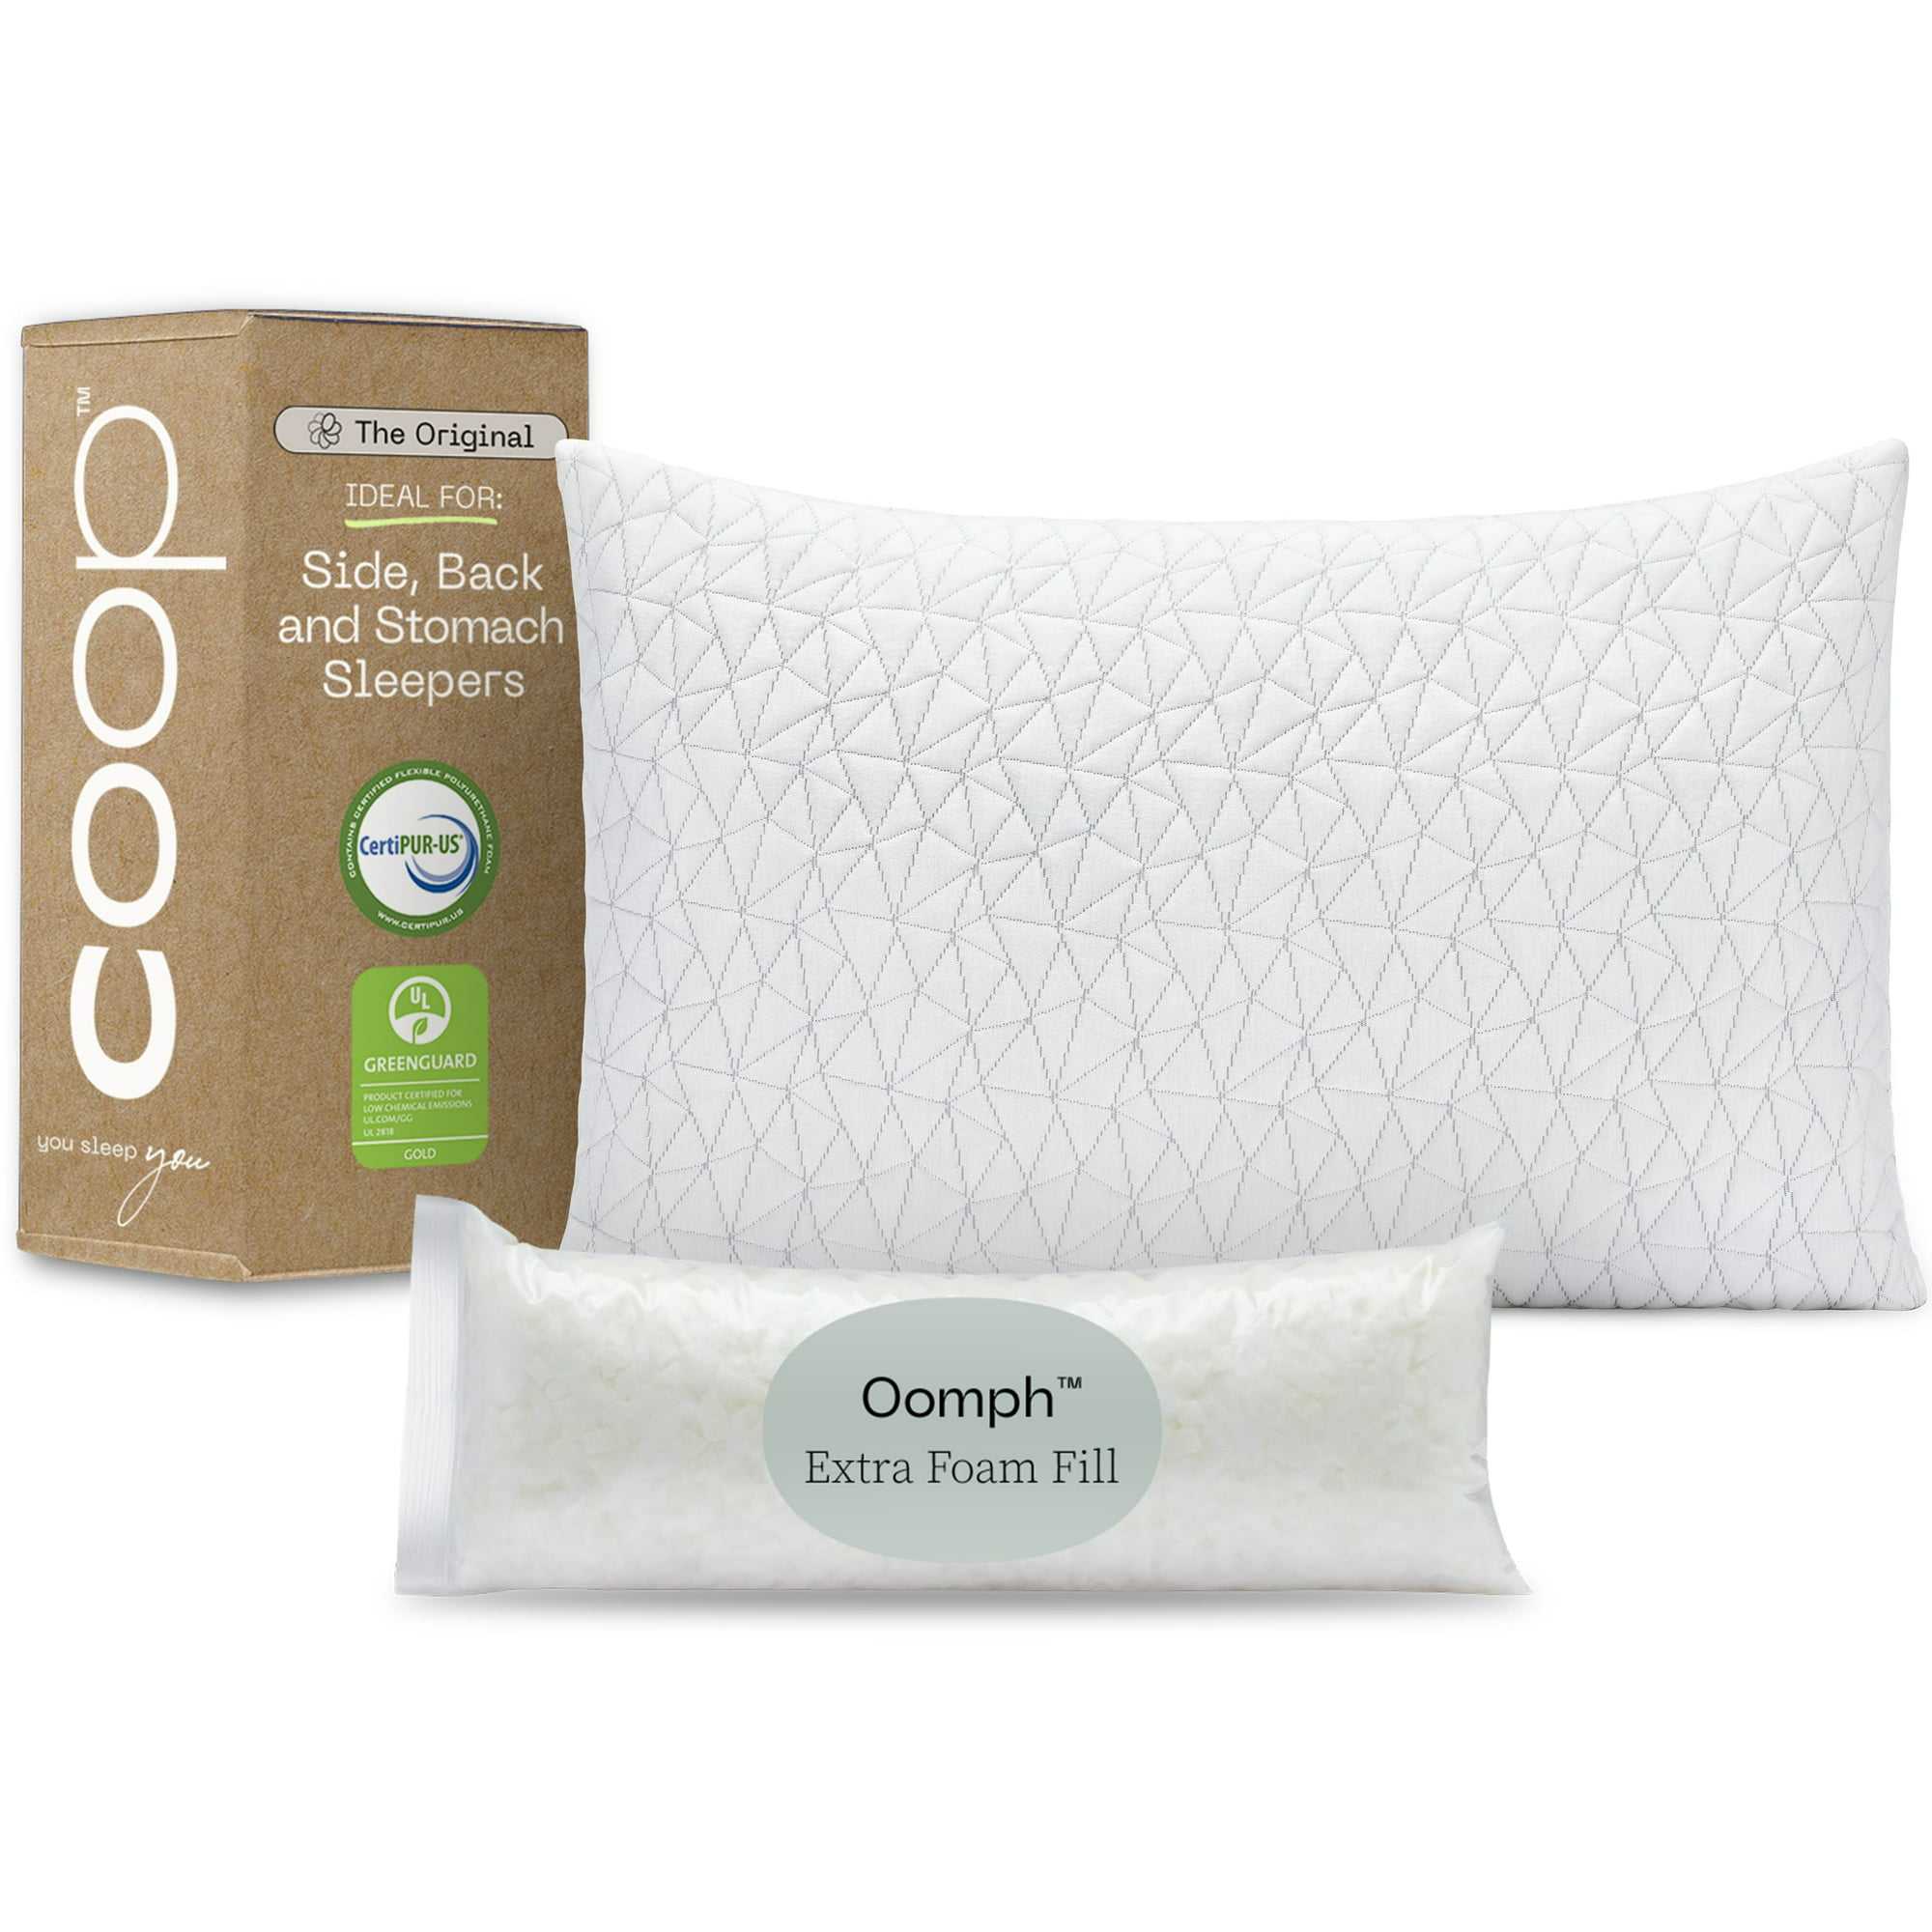 Coop Home Goods Original Loft Pillow Queen Size